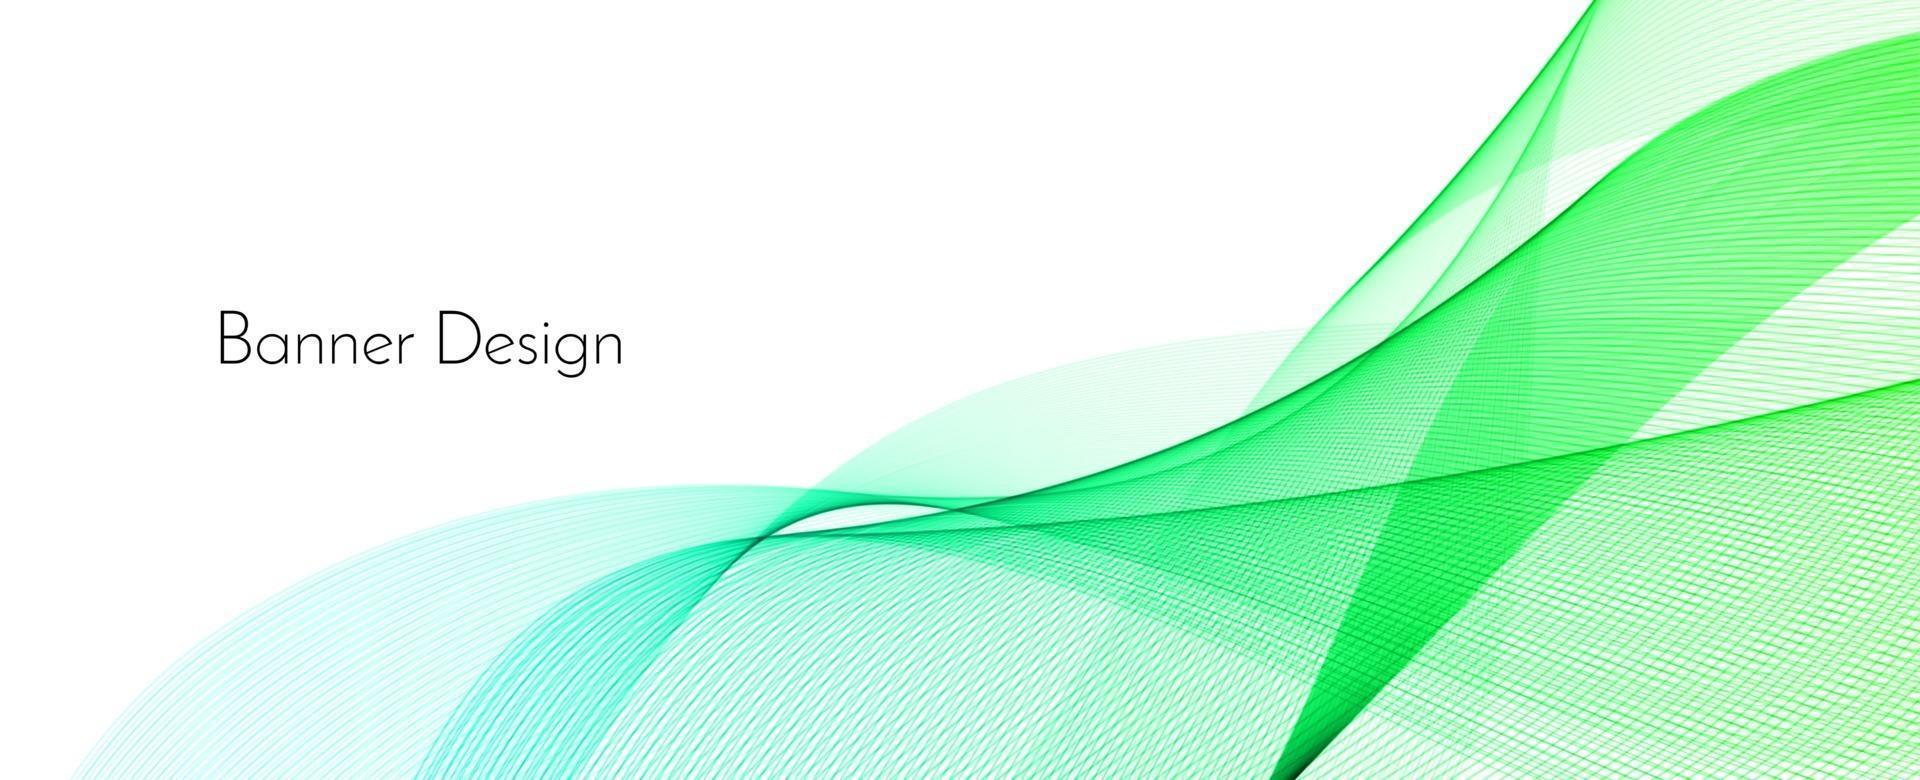 abstracte groene moderne decoratieve golf ontwerp banner achtergrond vector